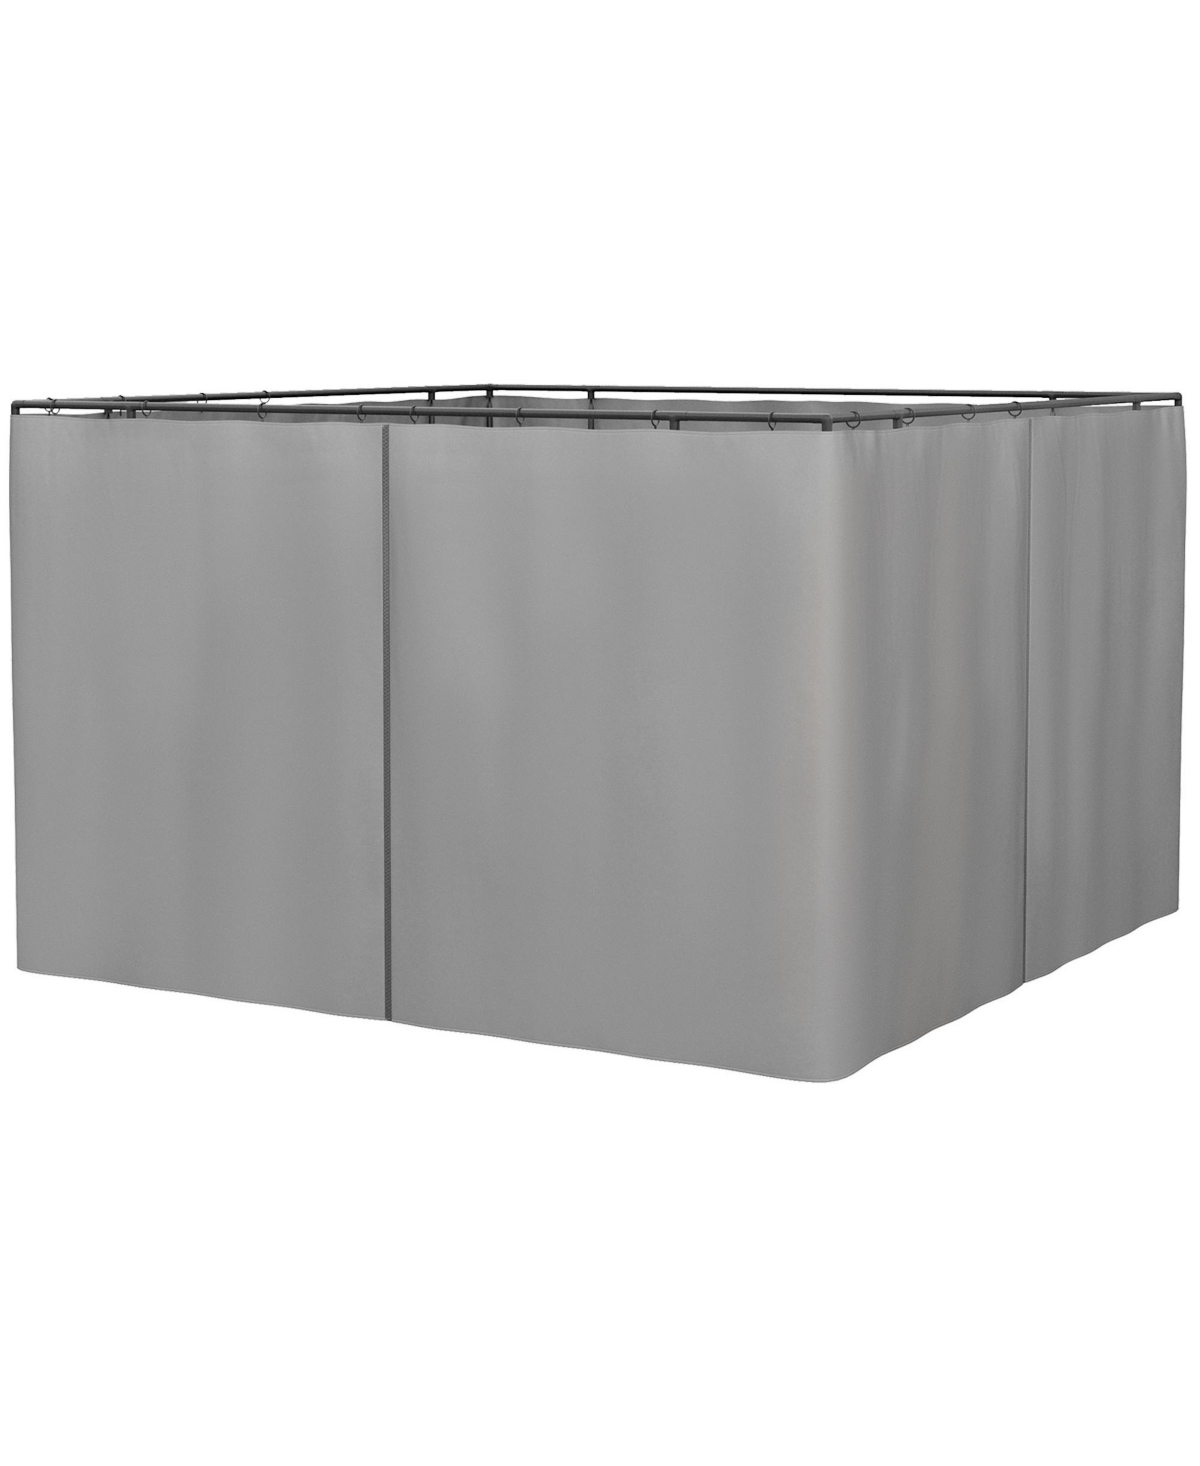 10' x 10' Universal Gazebo Sidewall Set with 4 Panels, 40 Hooks/C-Rings Included for Pergolas & Cabanas, Light Gray - Light gray